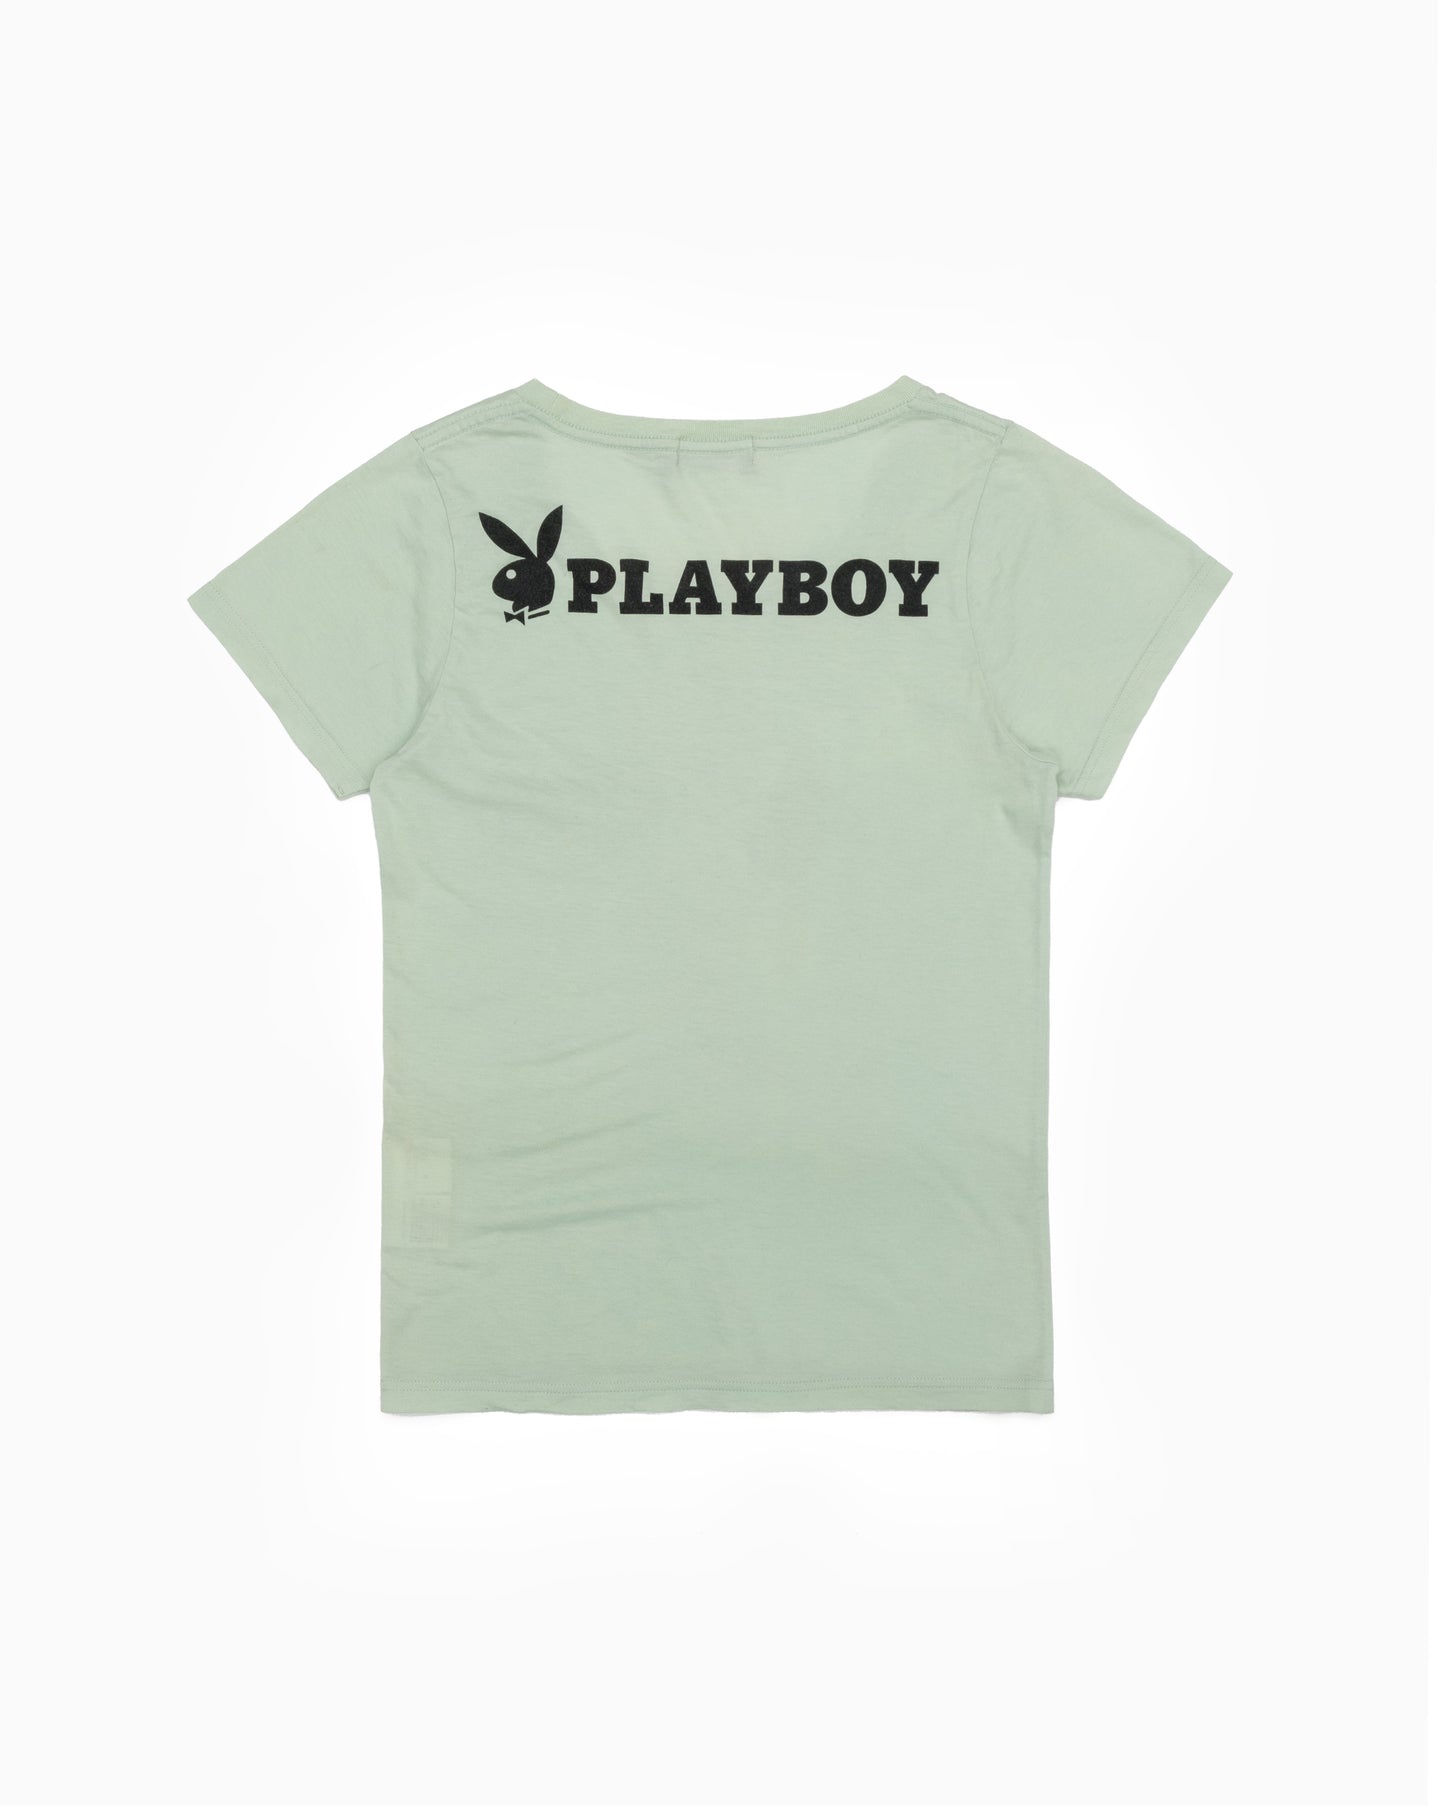 Hysteric Glamour x Playboy T-Shirt